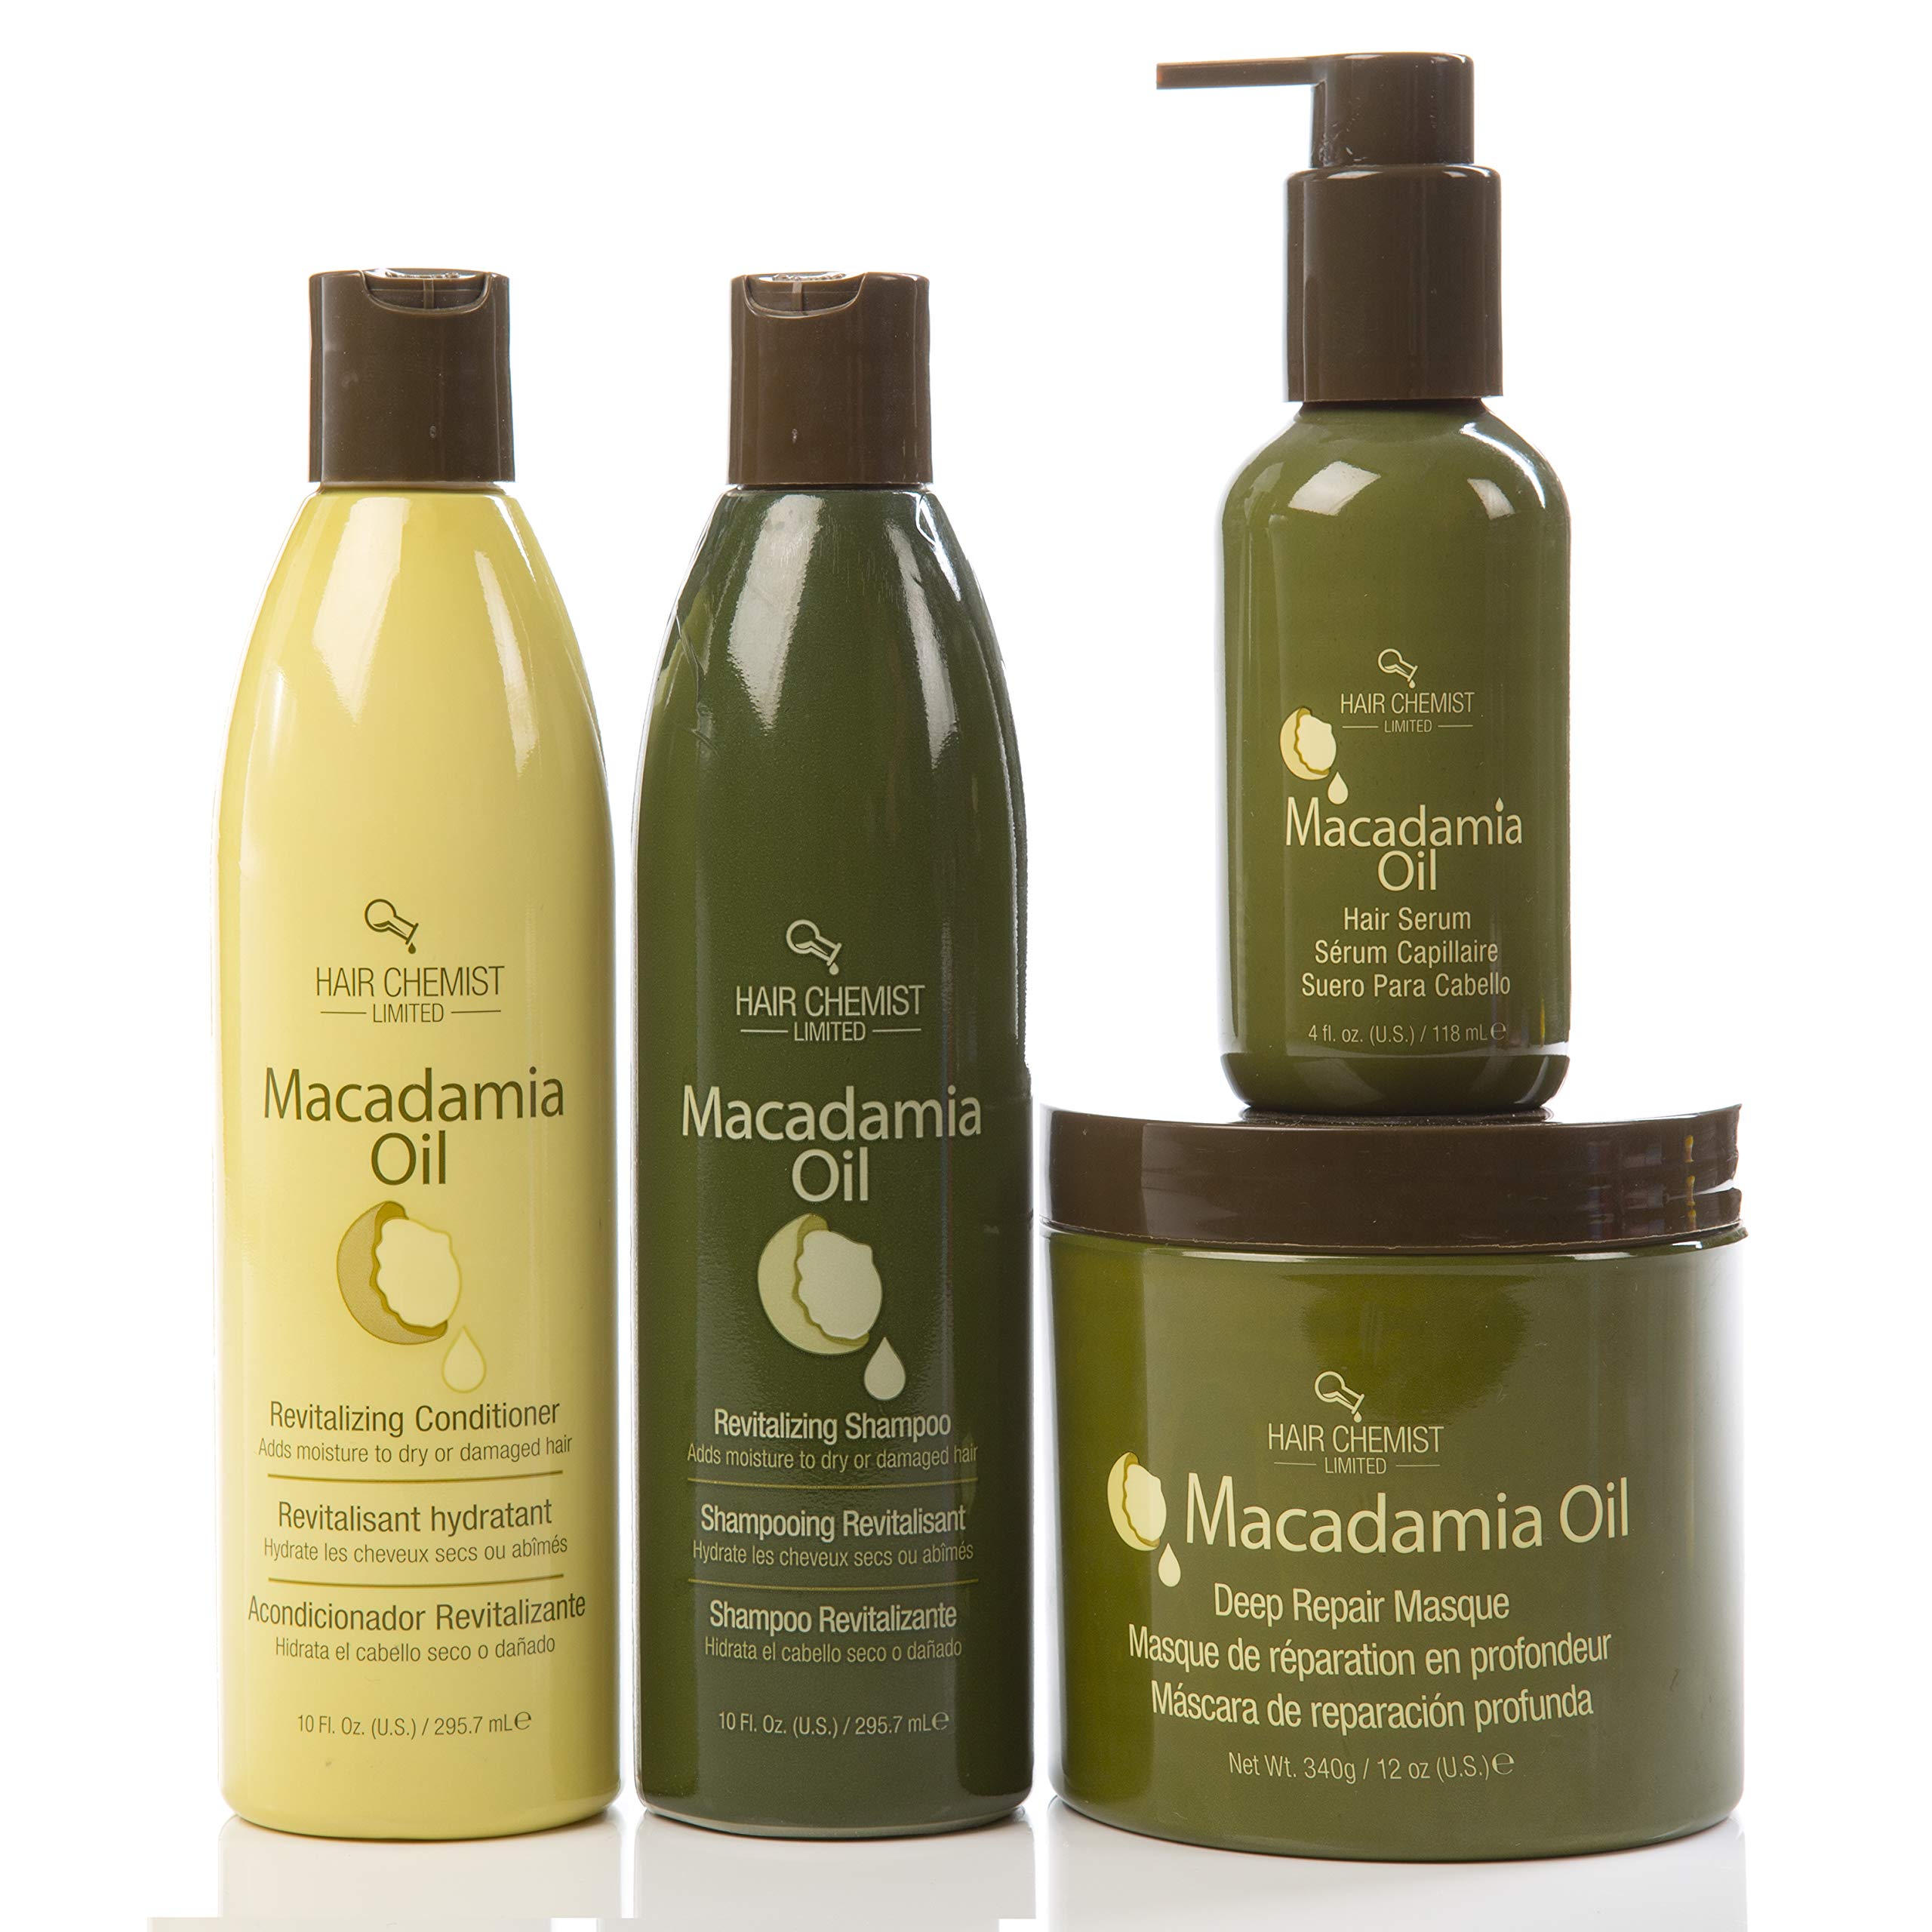 Vegan lizz - Benefits of Macadamia Oil for Hair